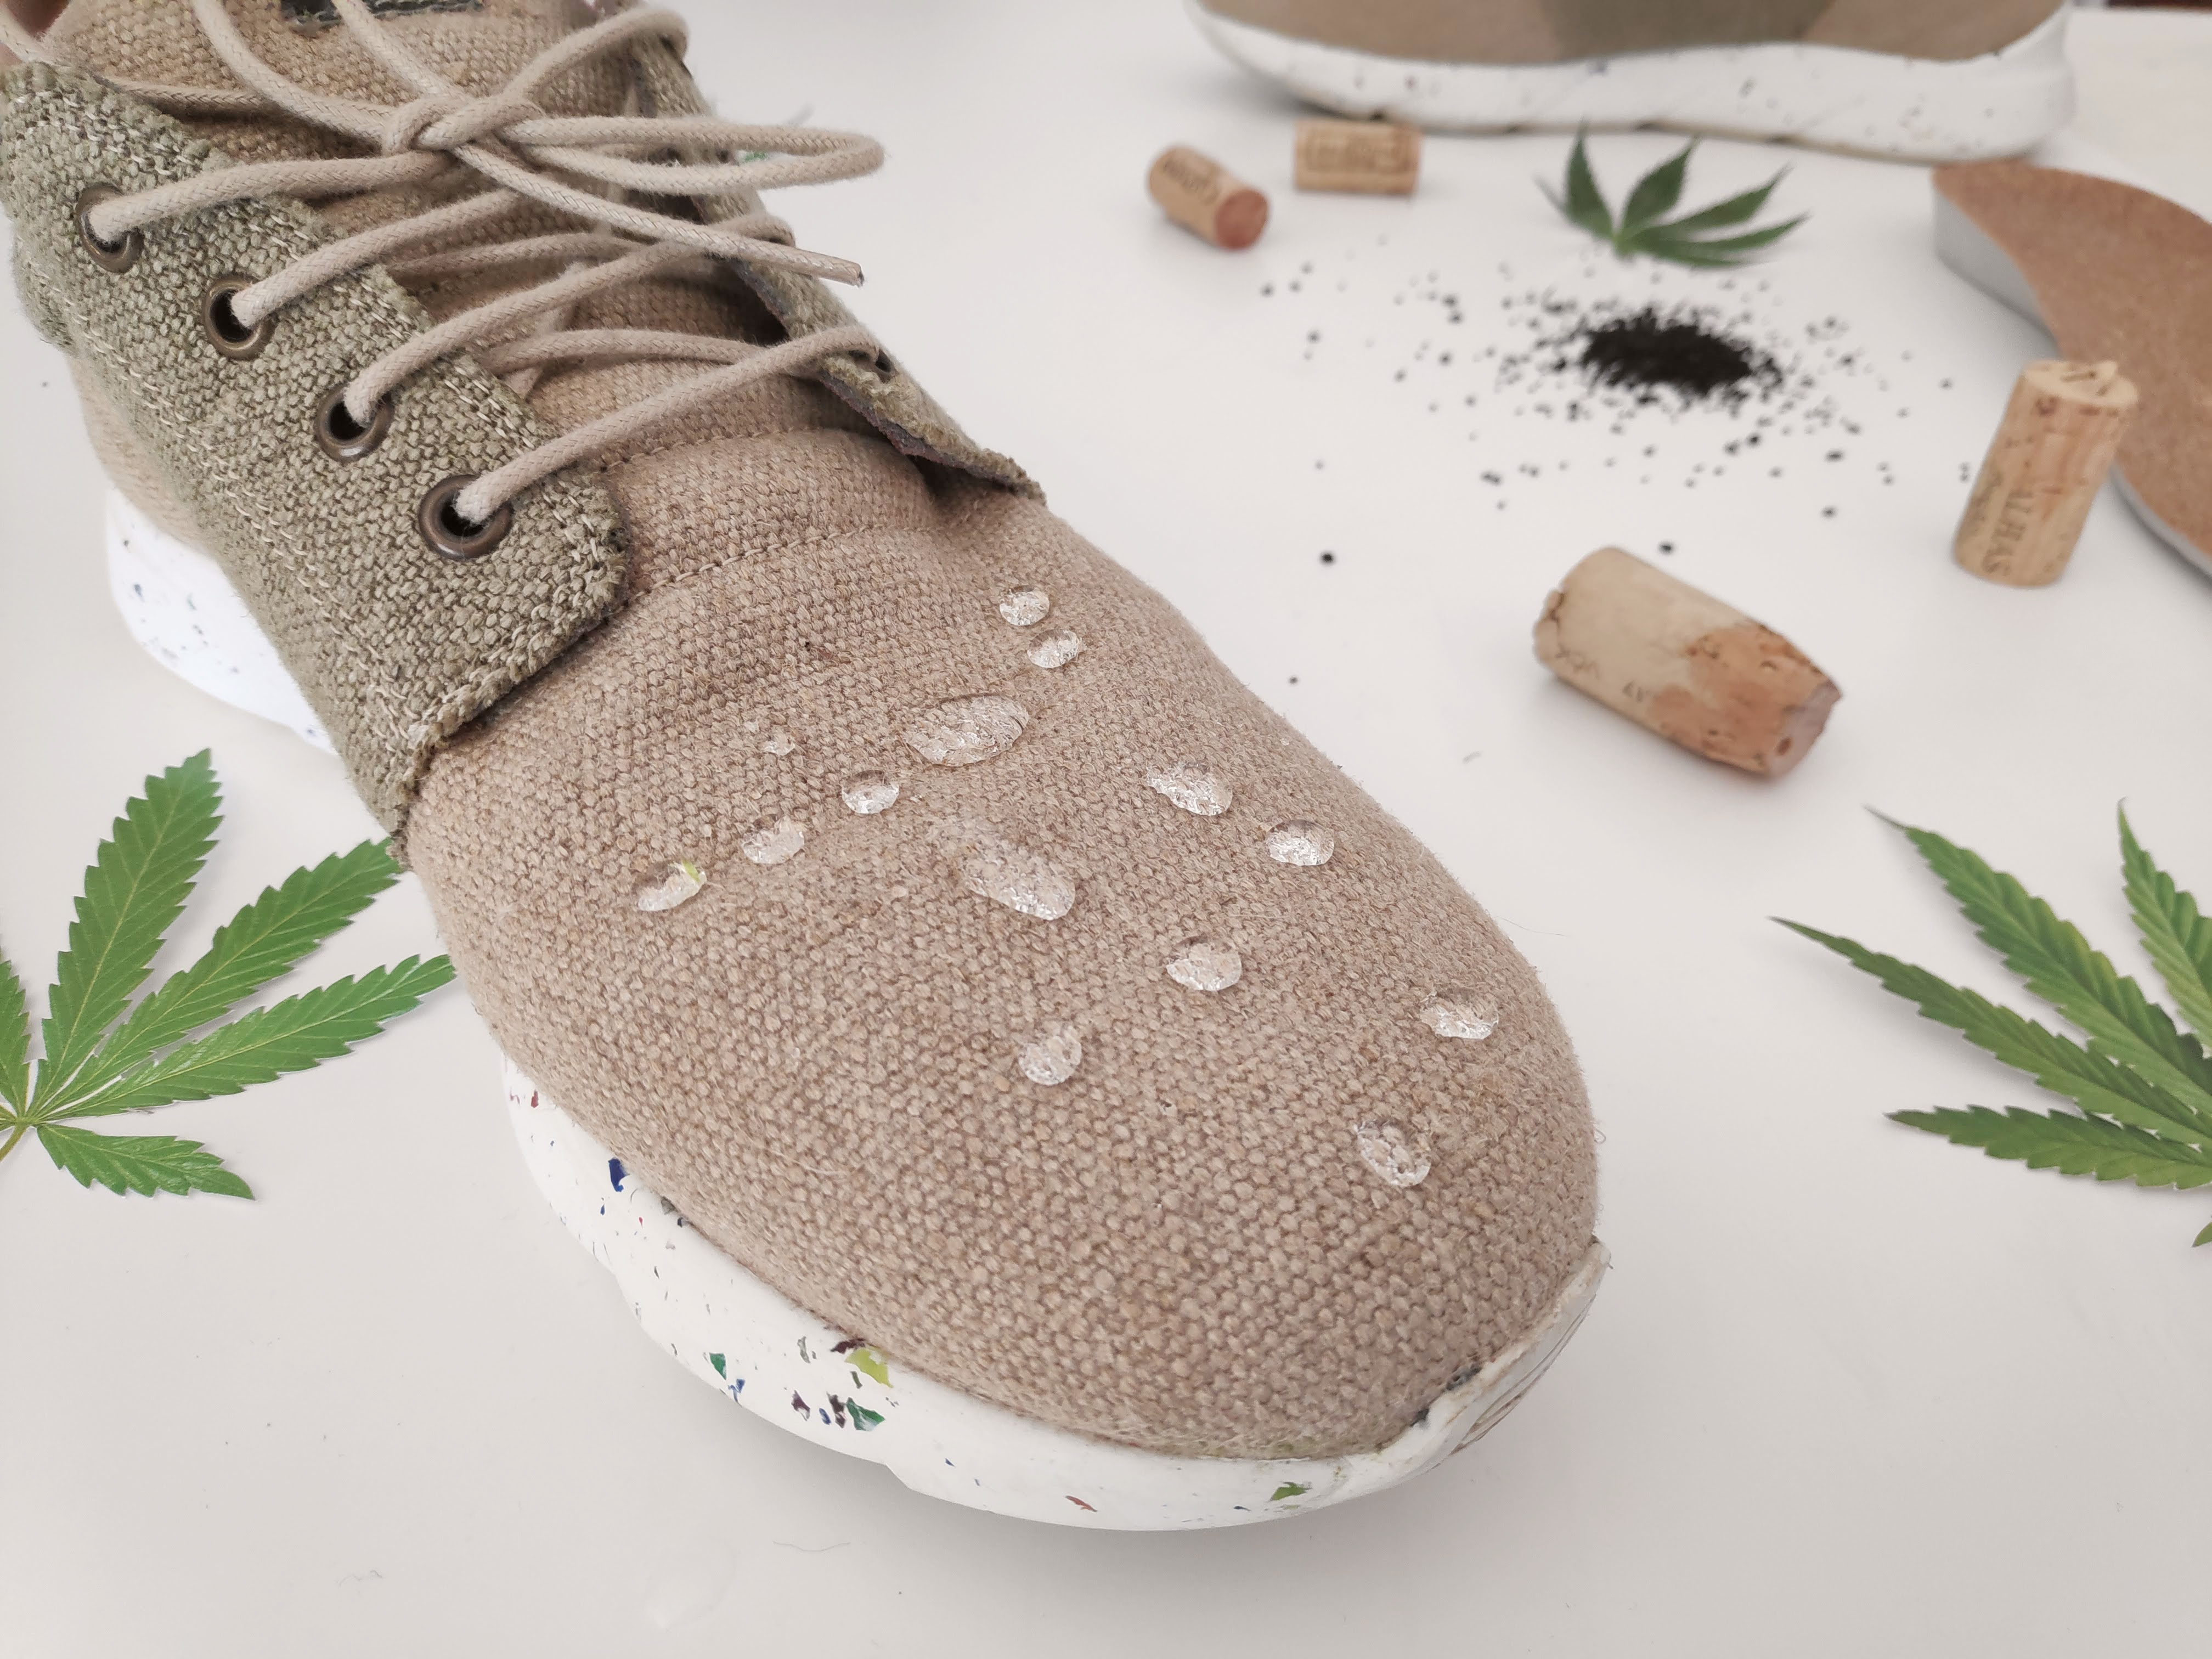 Waterproof hemp shoes - MaterialDistrict